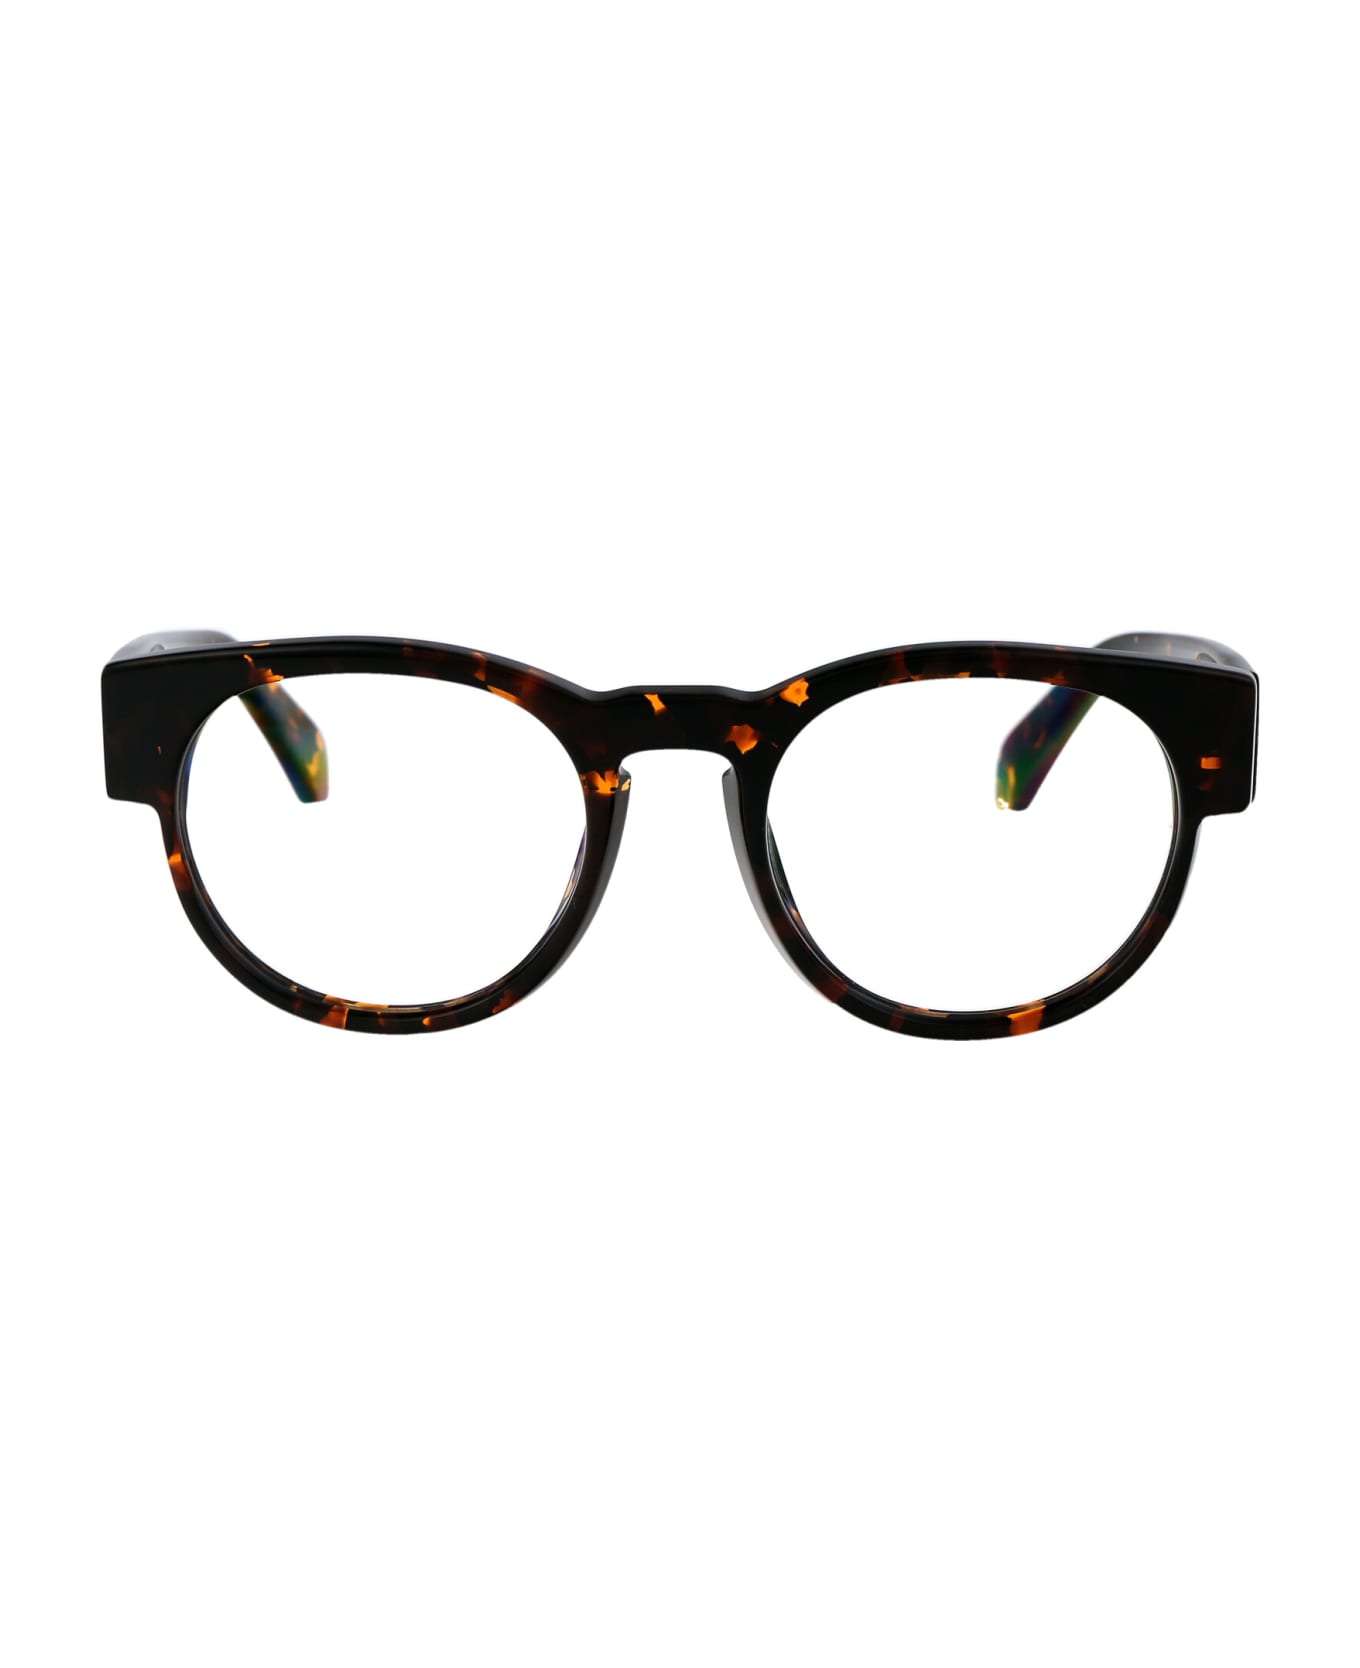 Off-White Optical Style 58 Glasses - 6000 HAVANA アイウェア